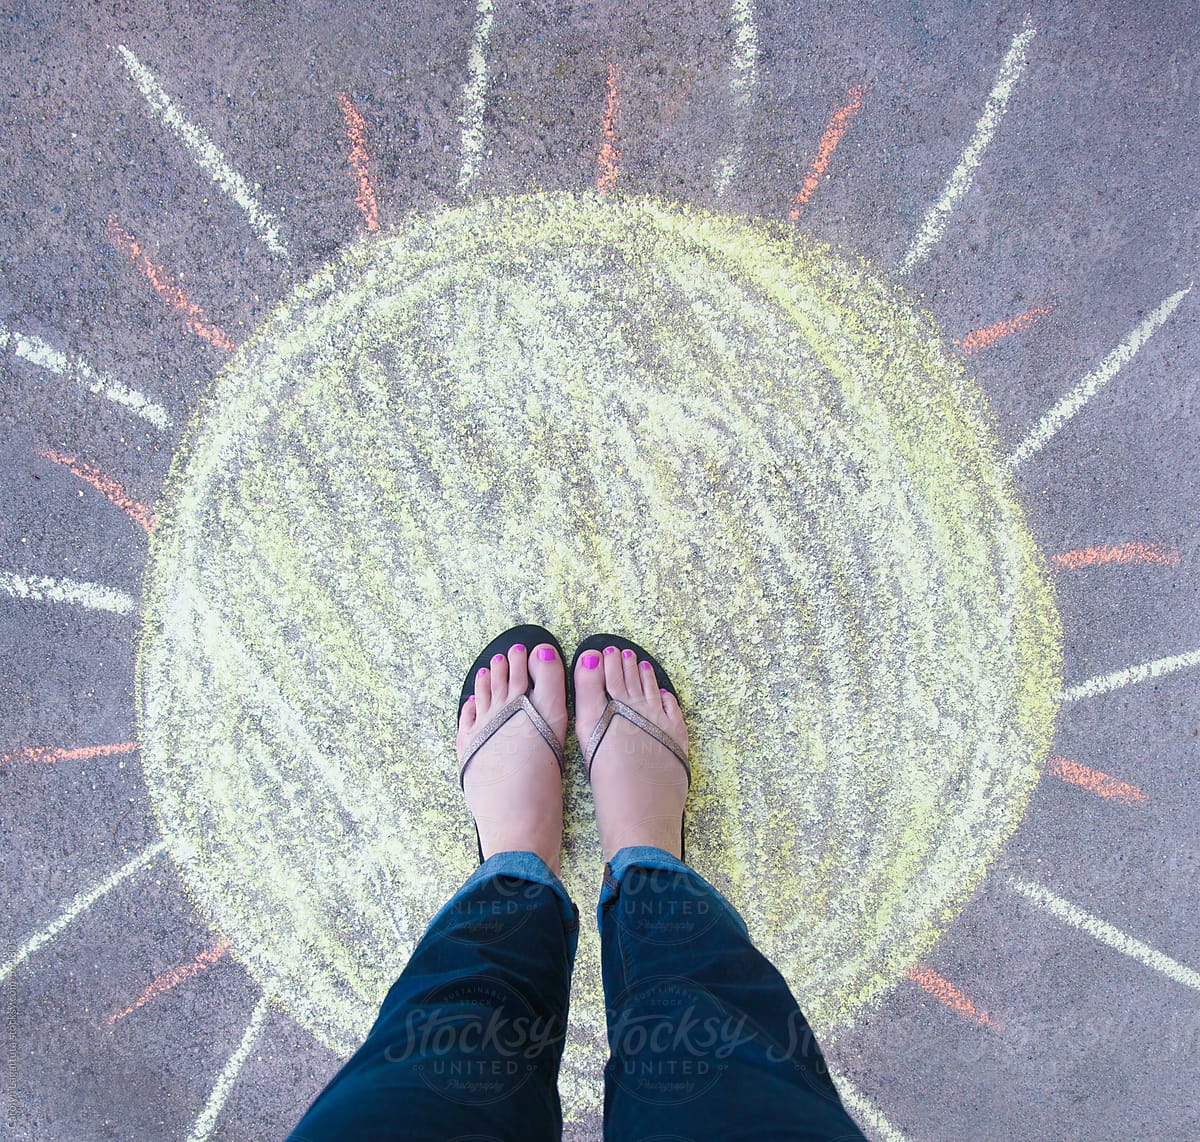 Feet in flip flops standing on a chalk drawn sun